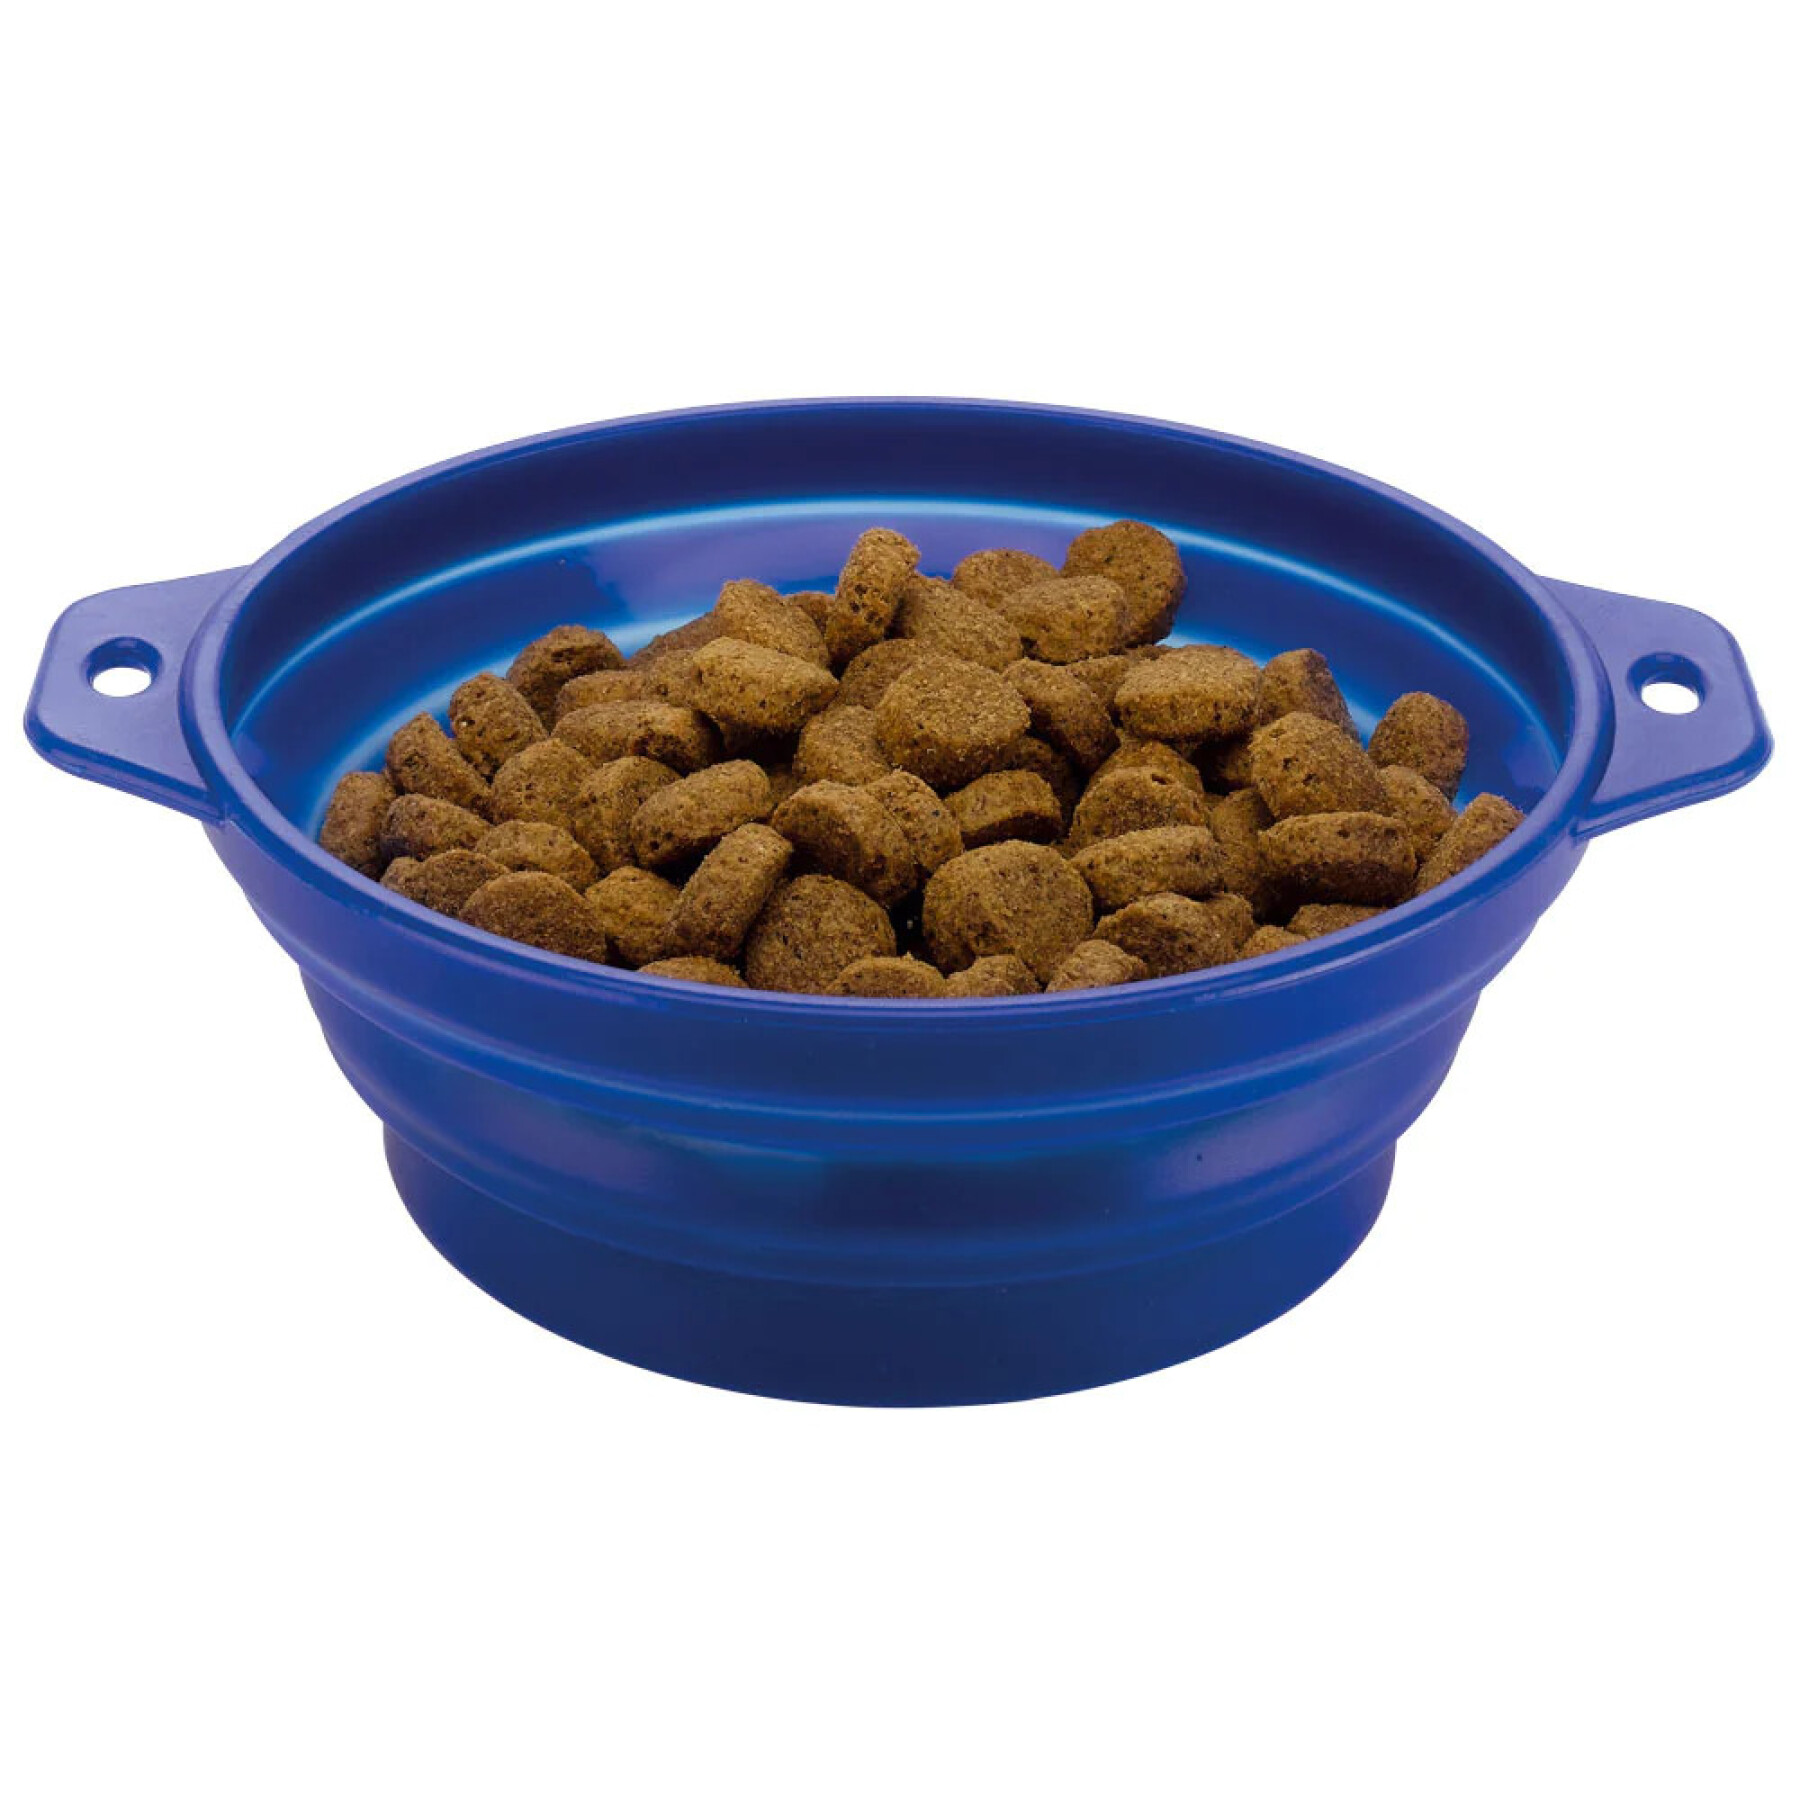 Dog and cat bowls Ferplast Yappy 1 LT